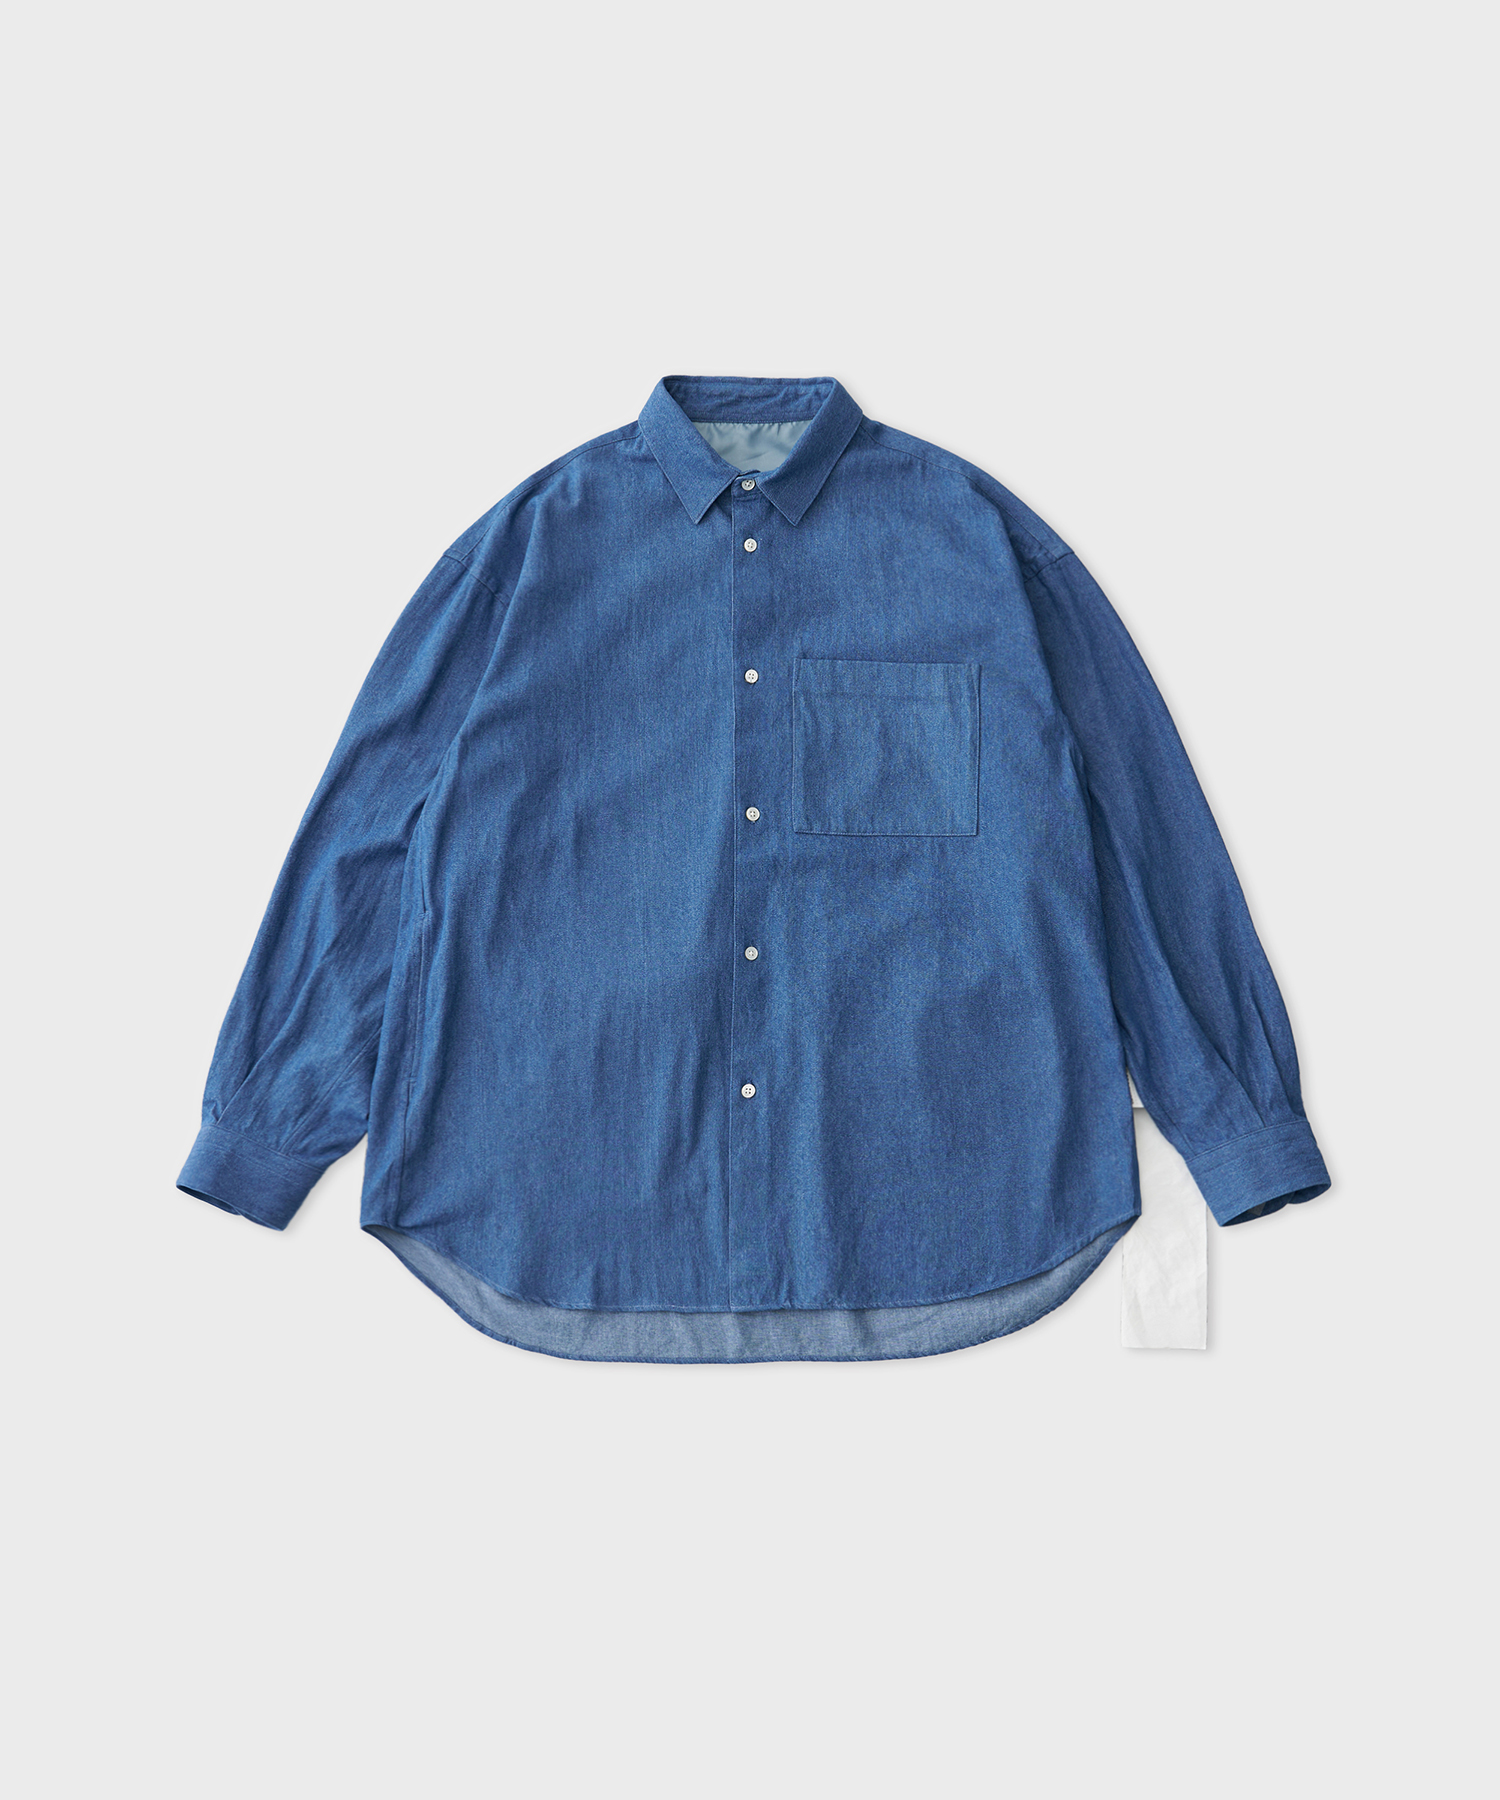 Jim Regular Collar Shirt (Indigo Blue)